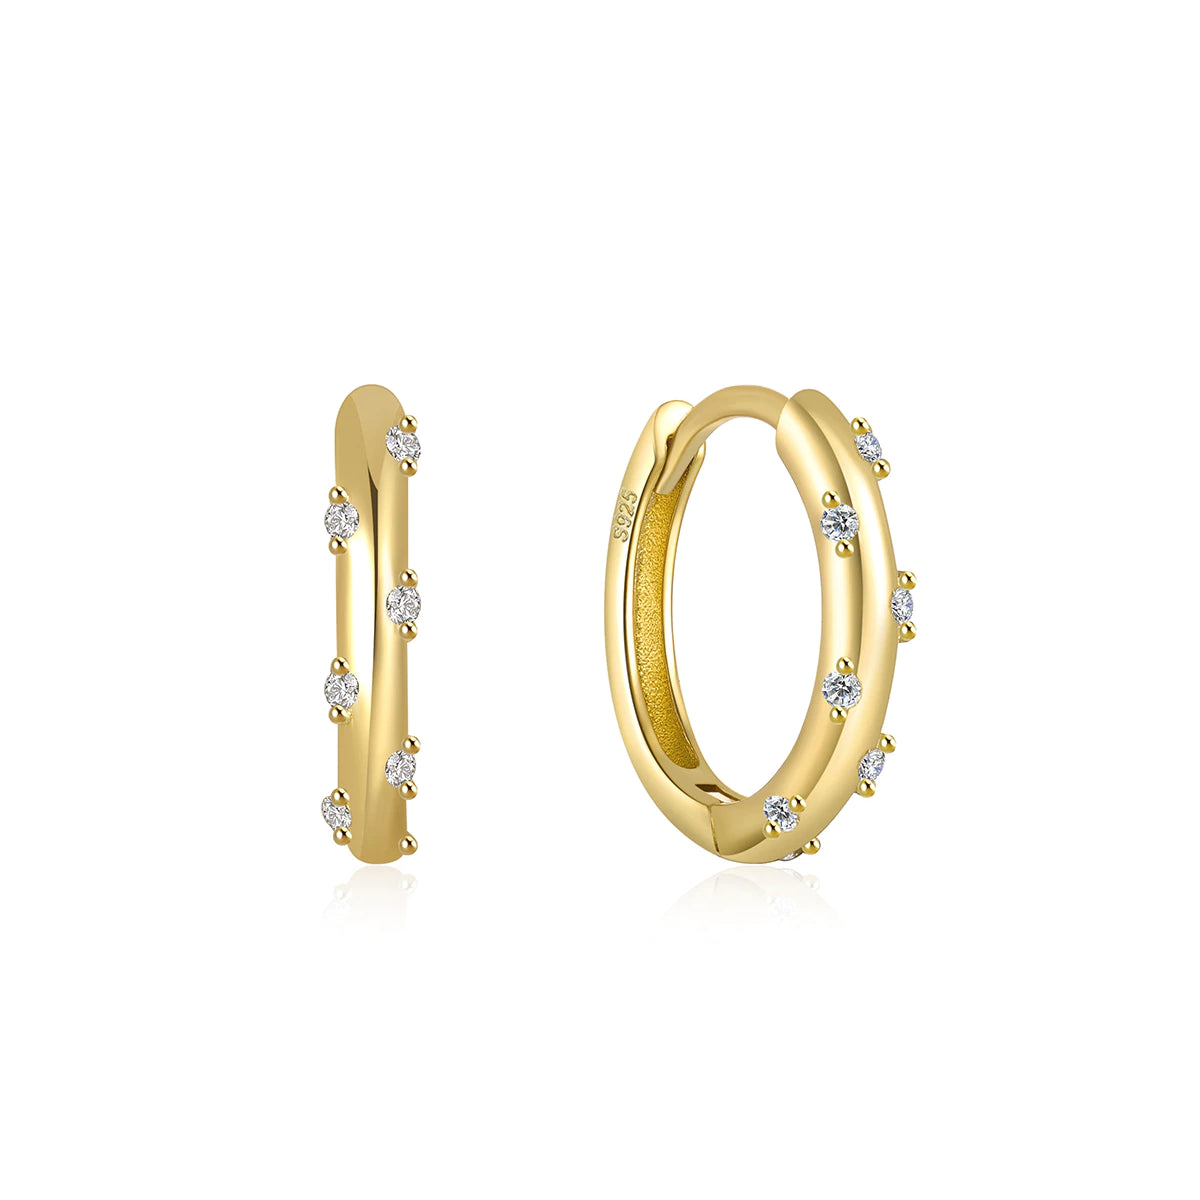 Lara Ohrringe Yasemen Store Schmuck Accessoires 925 Sterling Silber Sterlingsilber Sterling Silver 18K Vergoldet Gold jewel jewelry earring